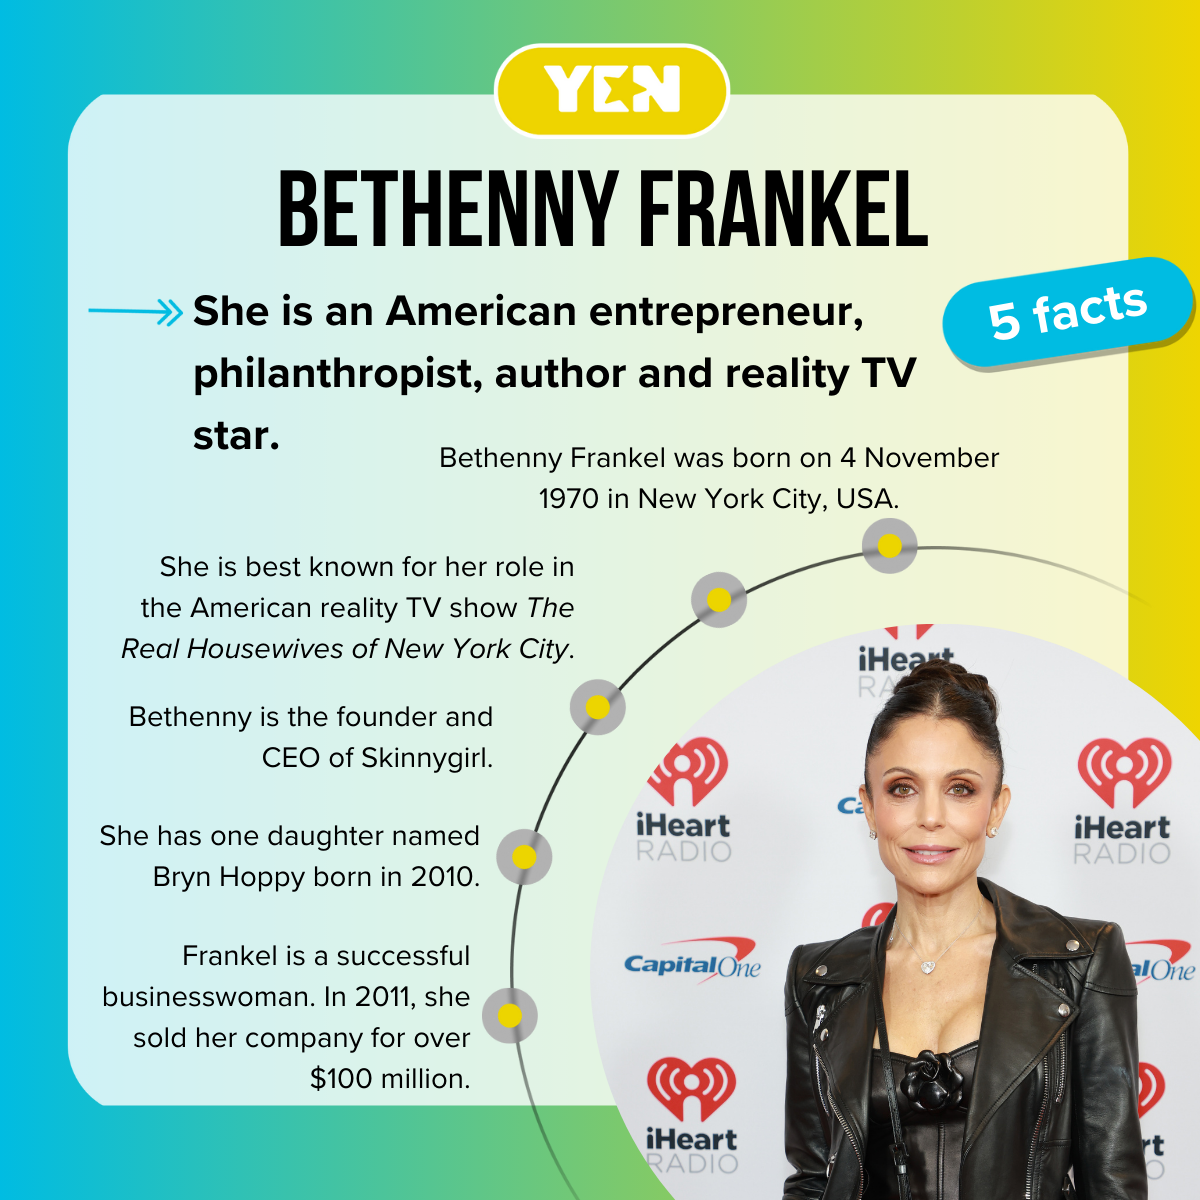 Facts about Bethenny Frankel